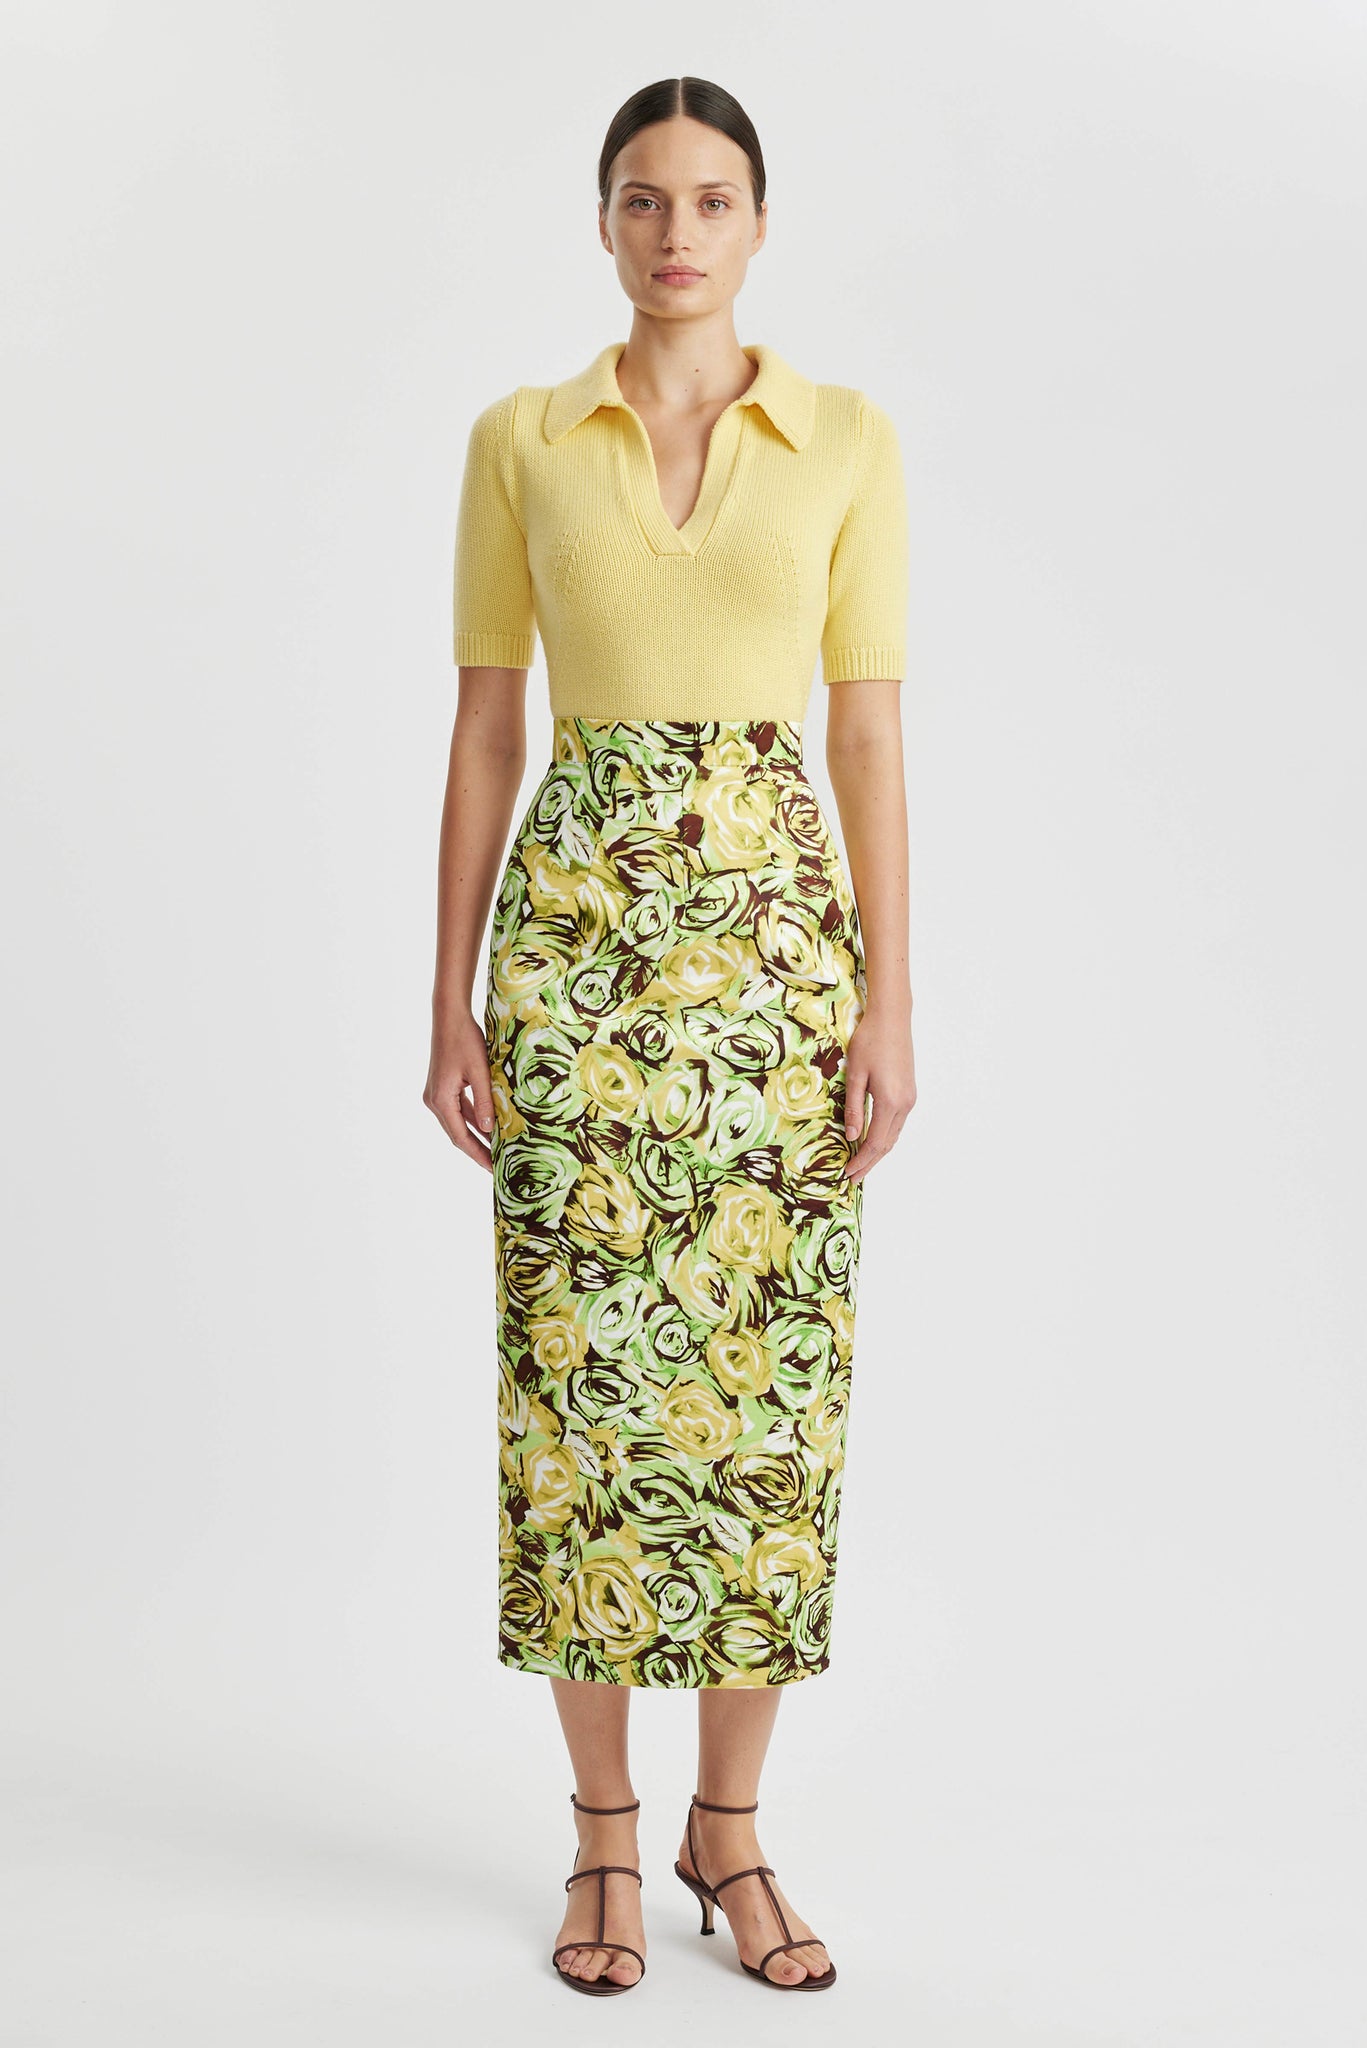 Lorelei Skirt In Abstract Roses Green & Lemon Twill | Emilia Wickstead